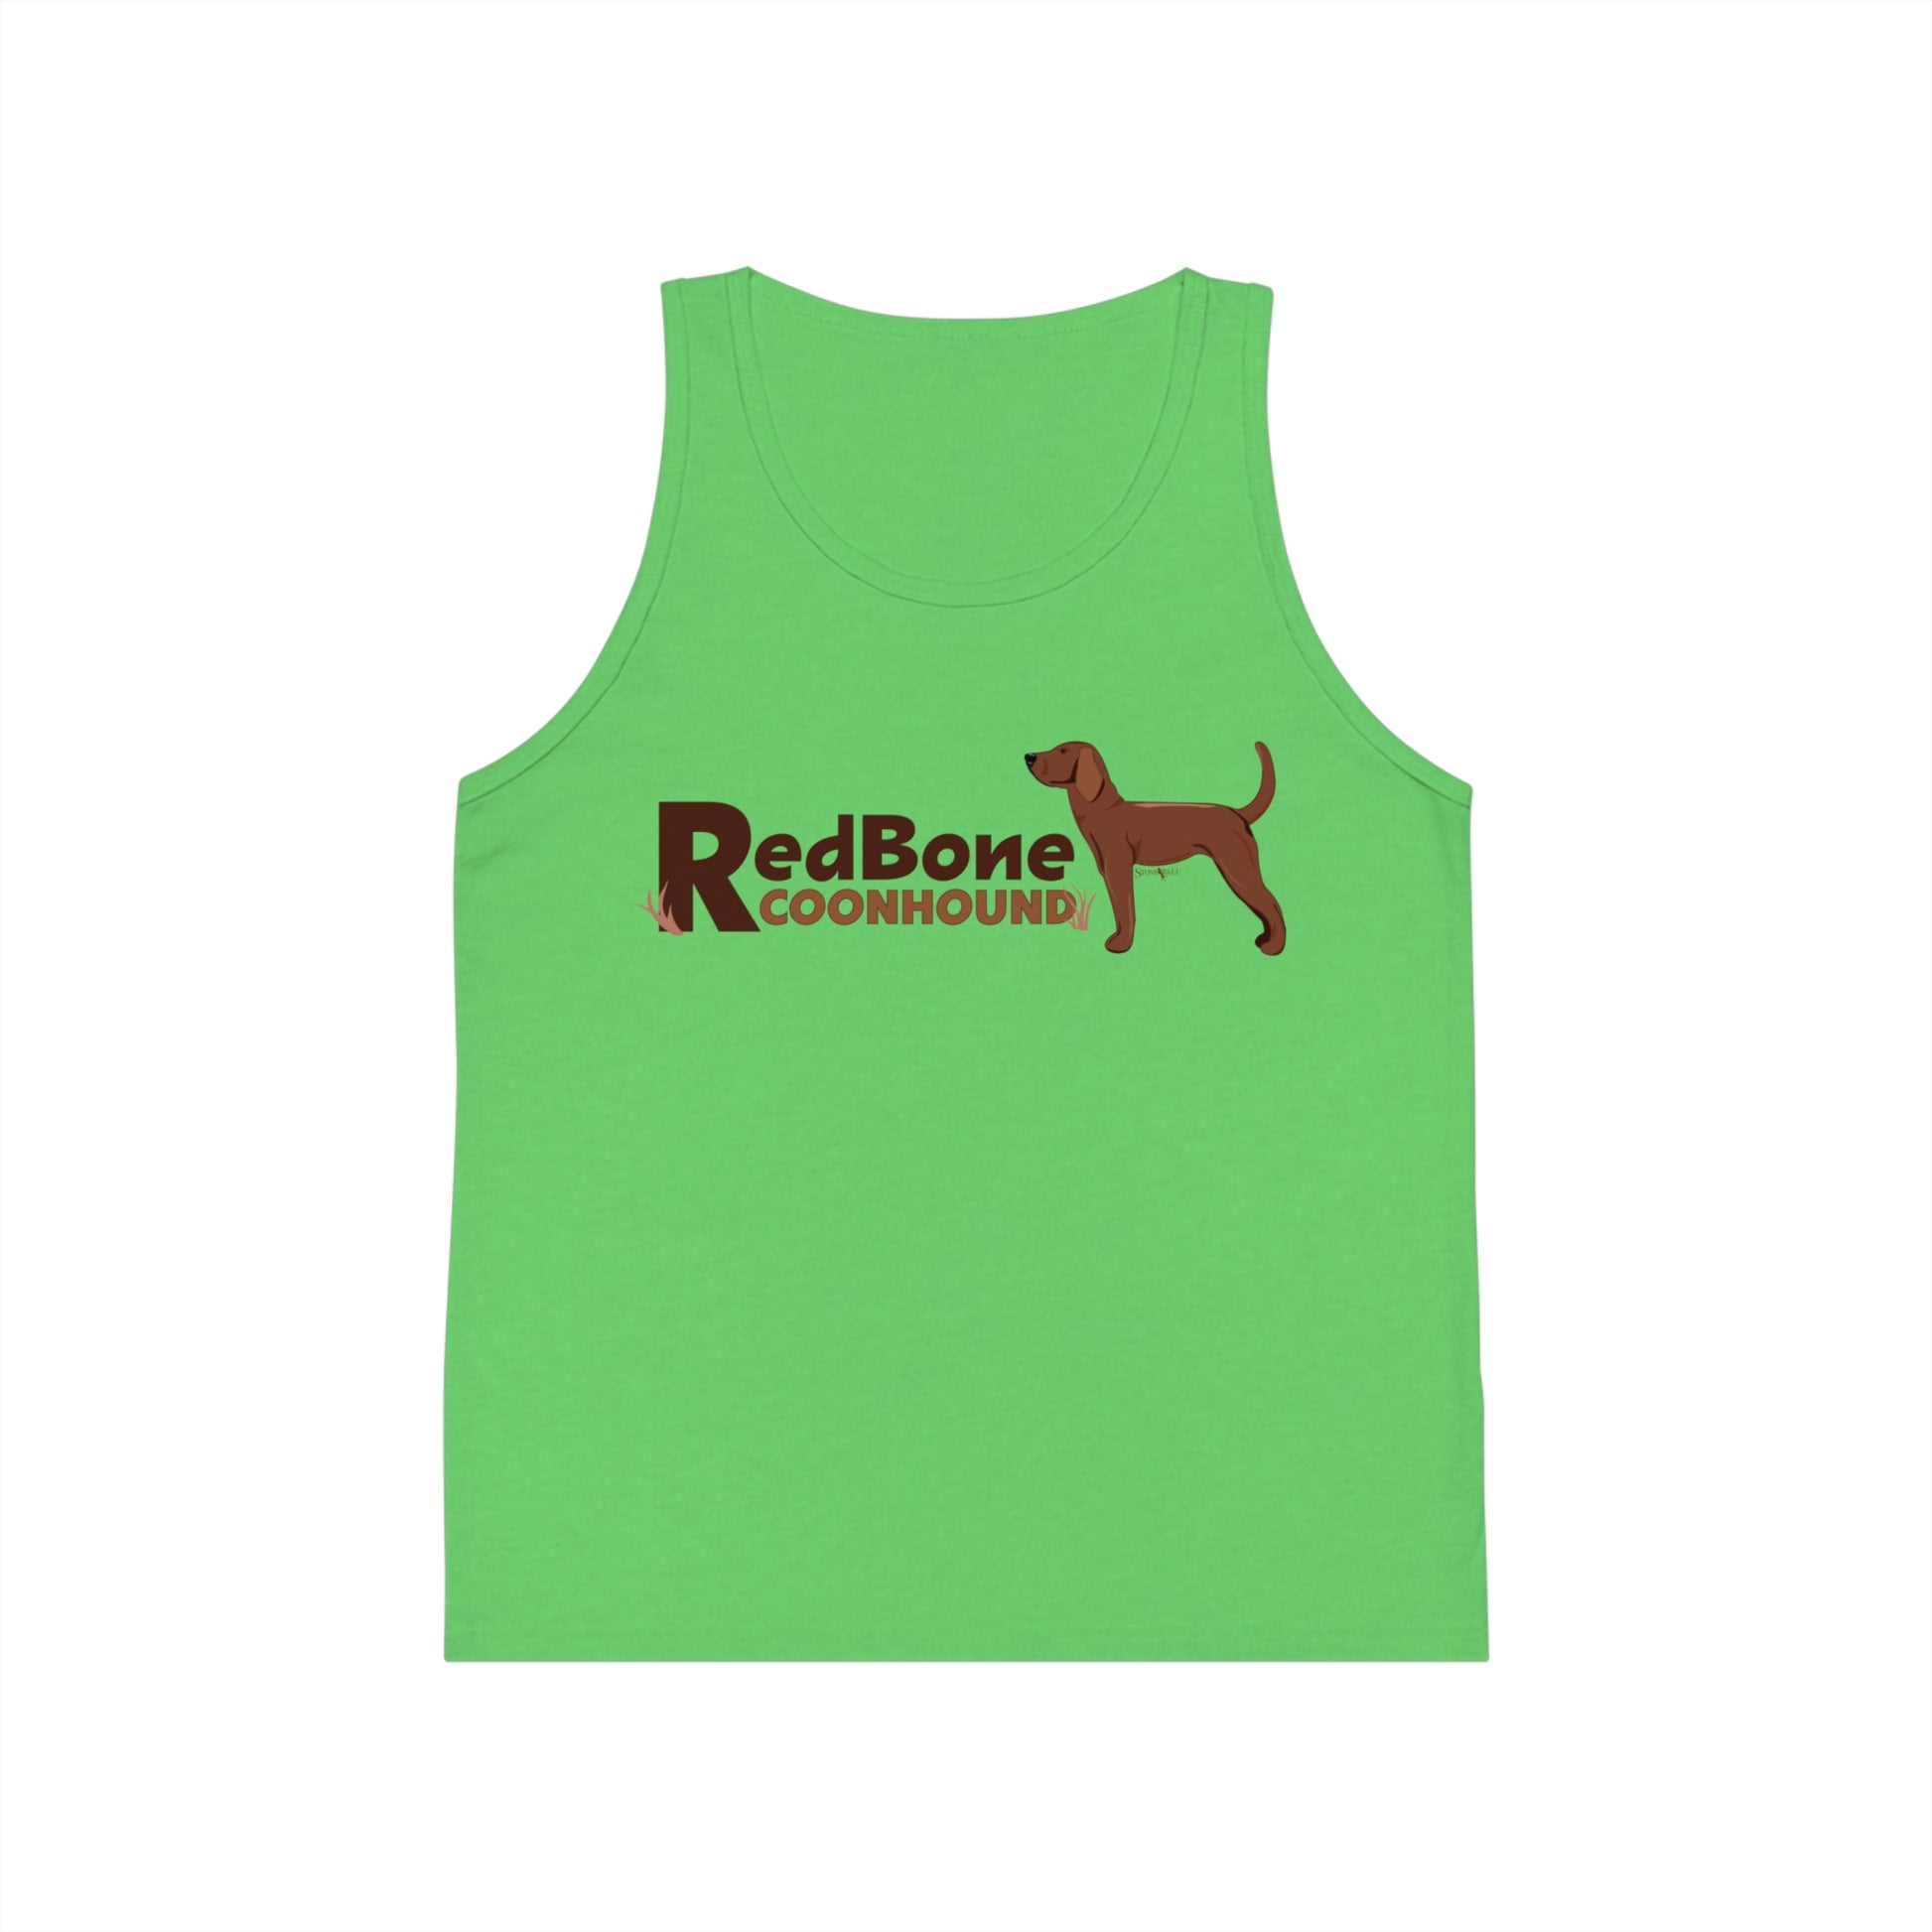 Redbone coonhound tank top